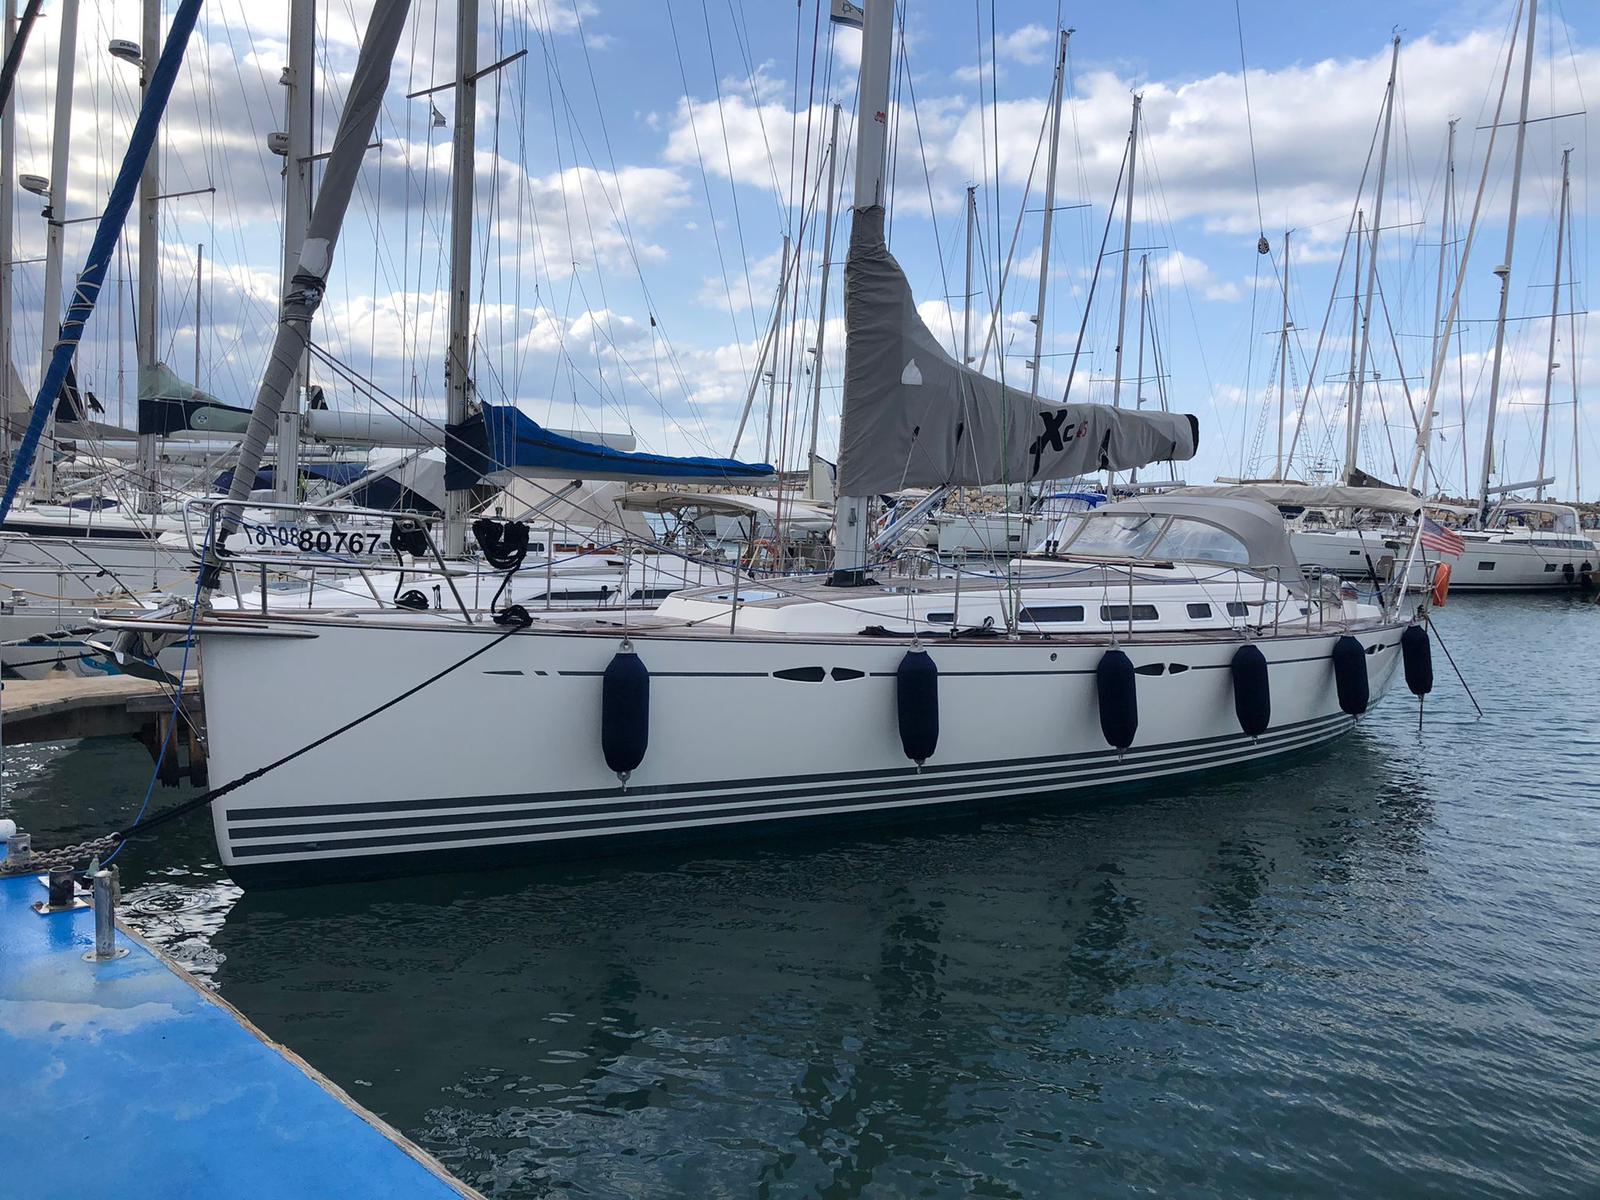 xc 45 sailboat